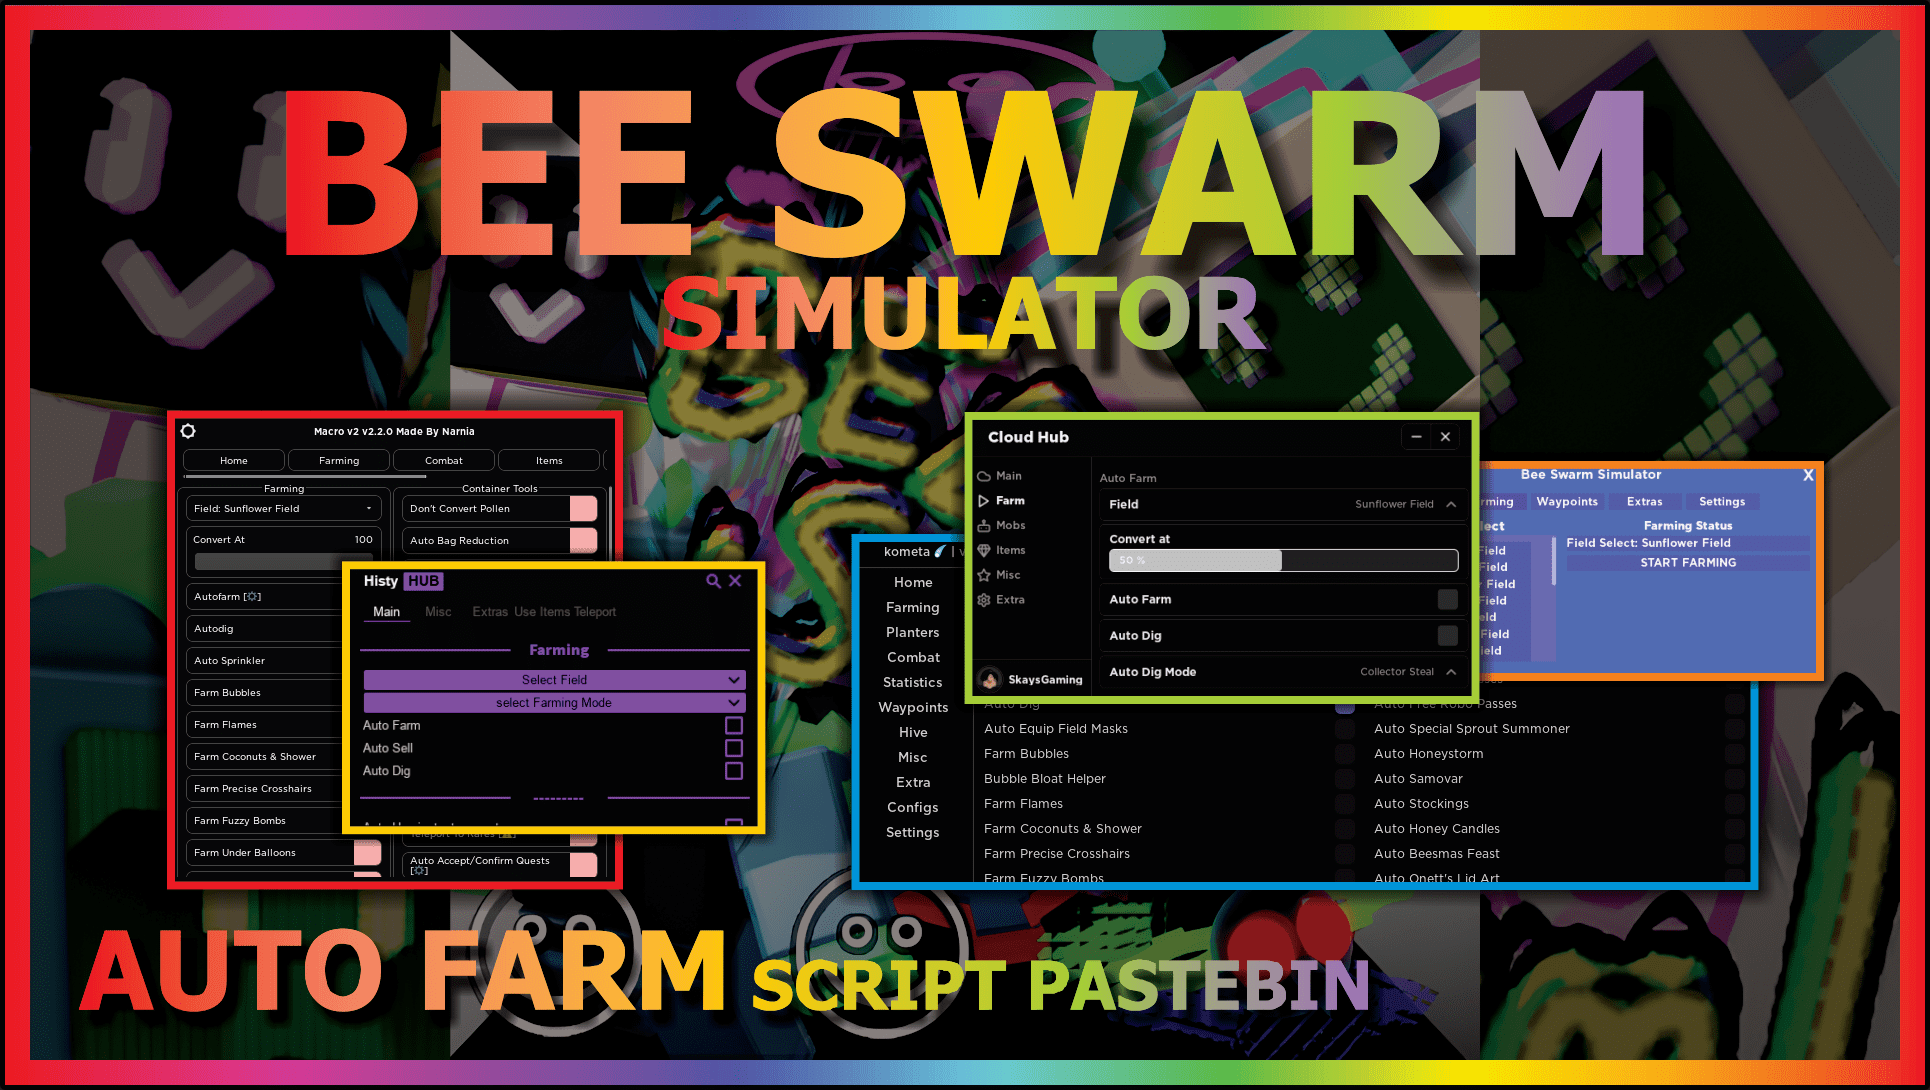 Bee swarm simulator script pastebin